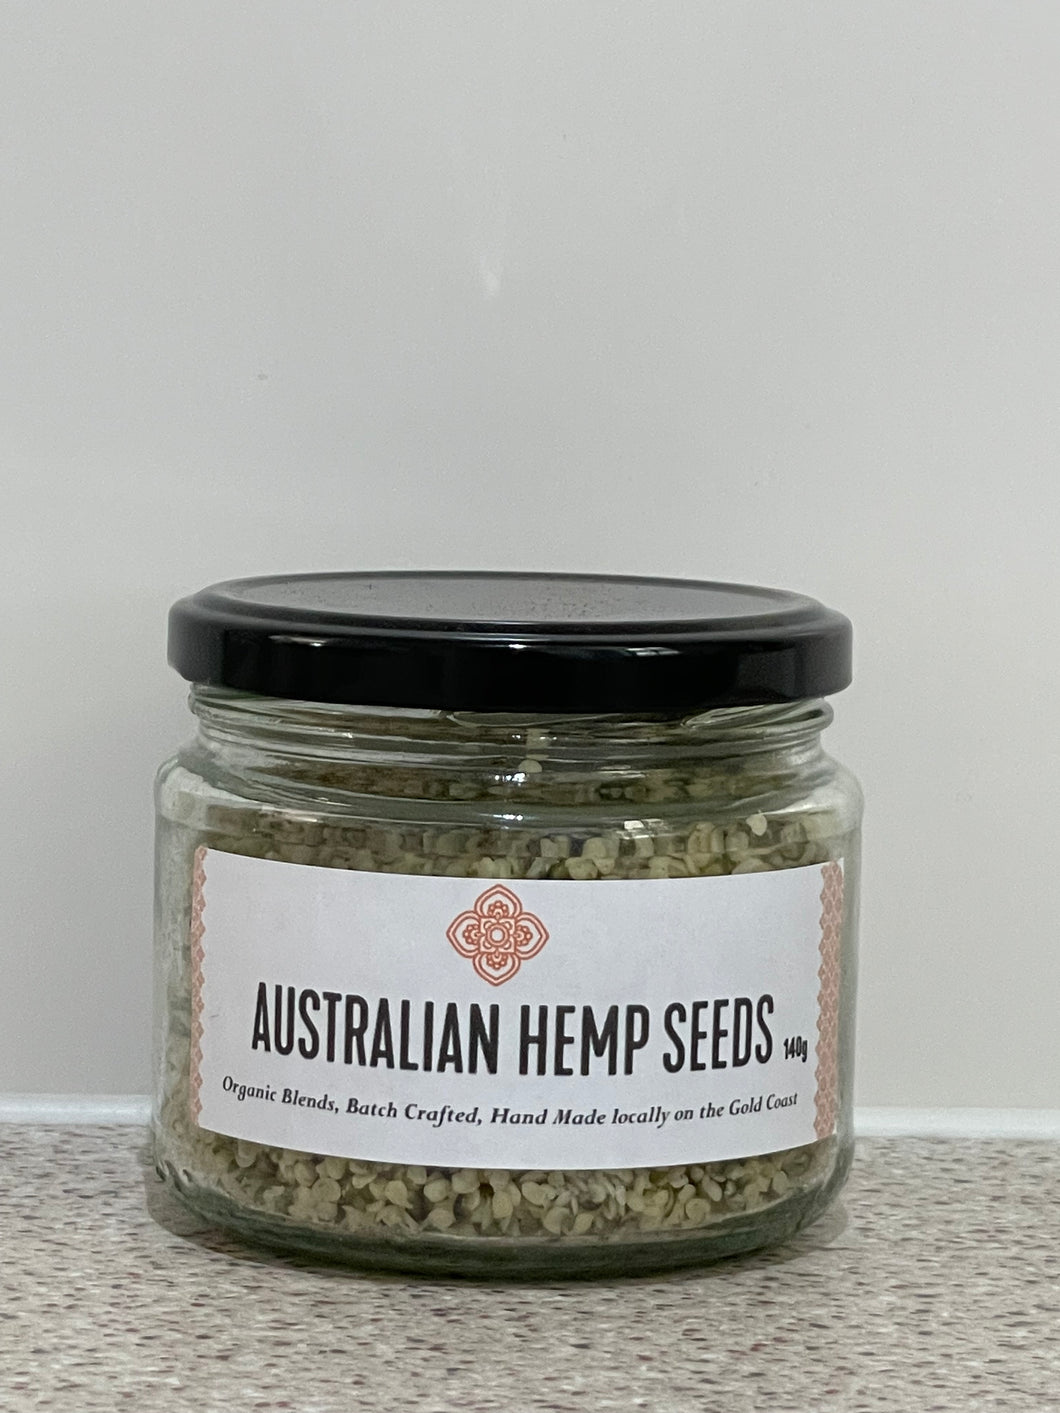 Australian Hemp Seeds packaged in a glass jar. 